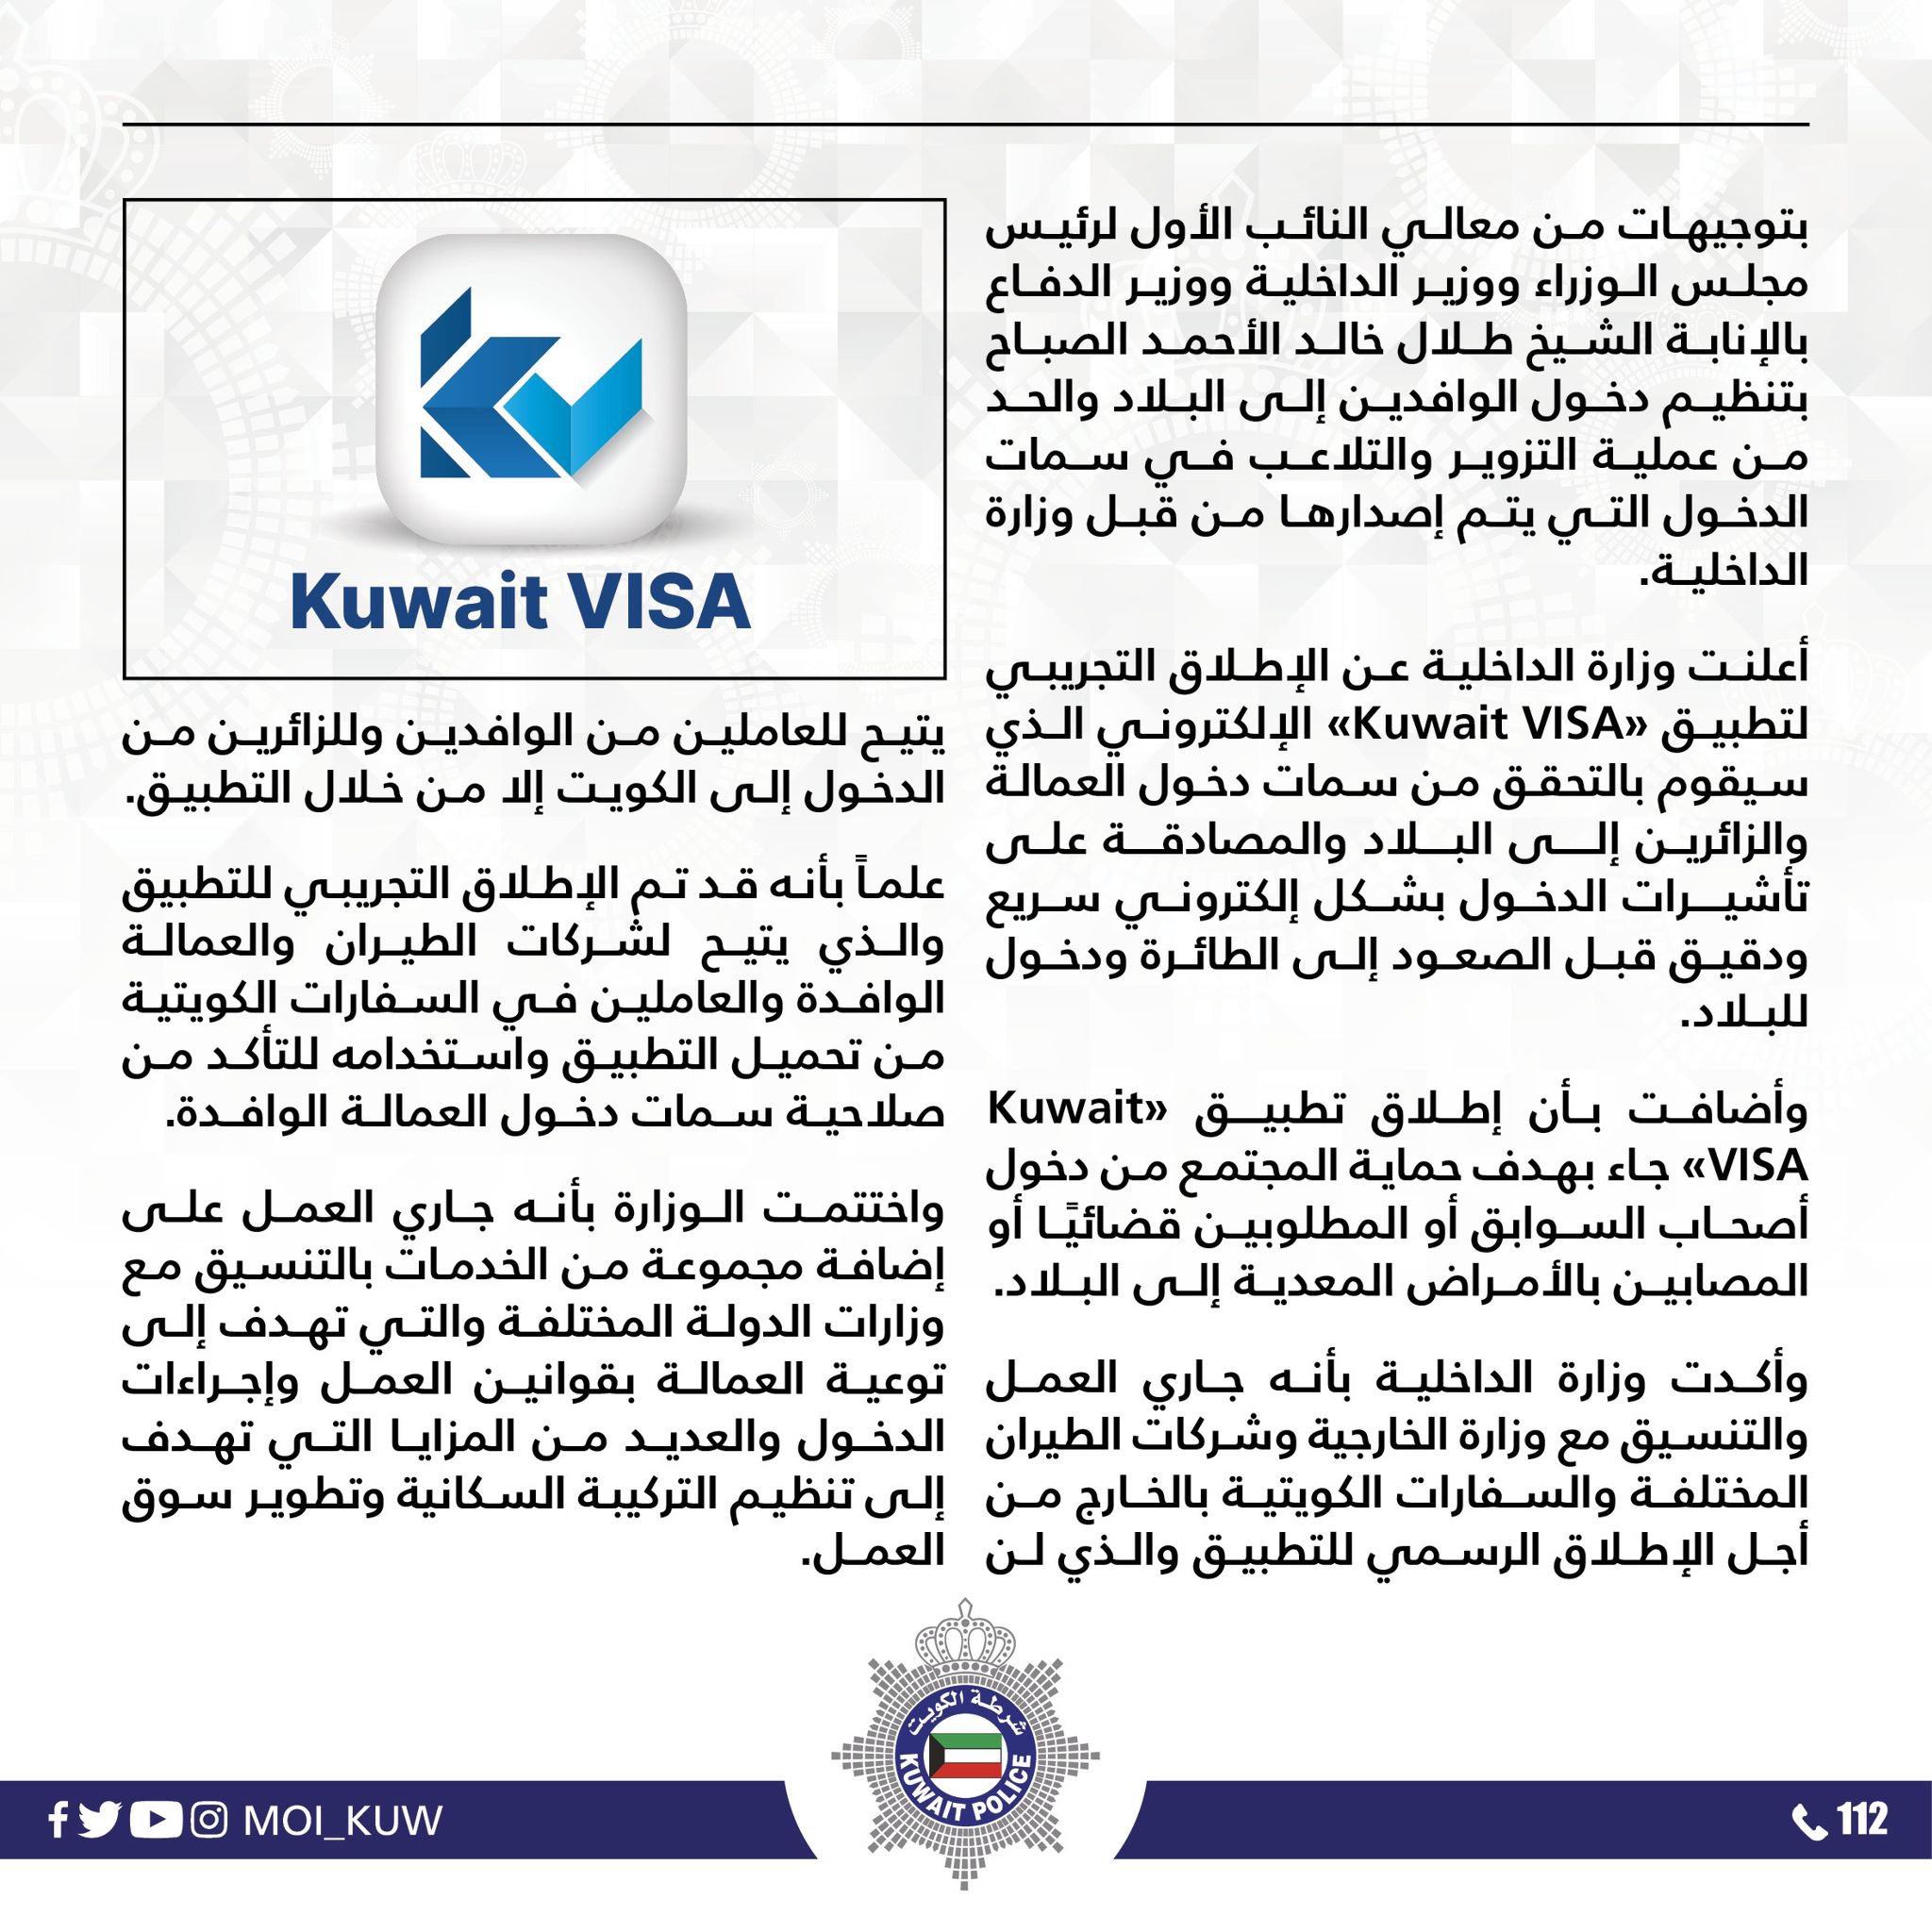 MoI Kuwait Launched Kuwait Visa App, Download KuwaitVisa App Online